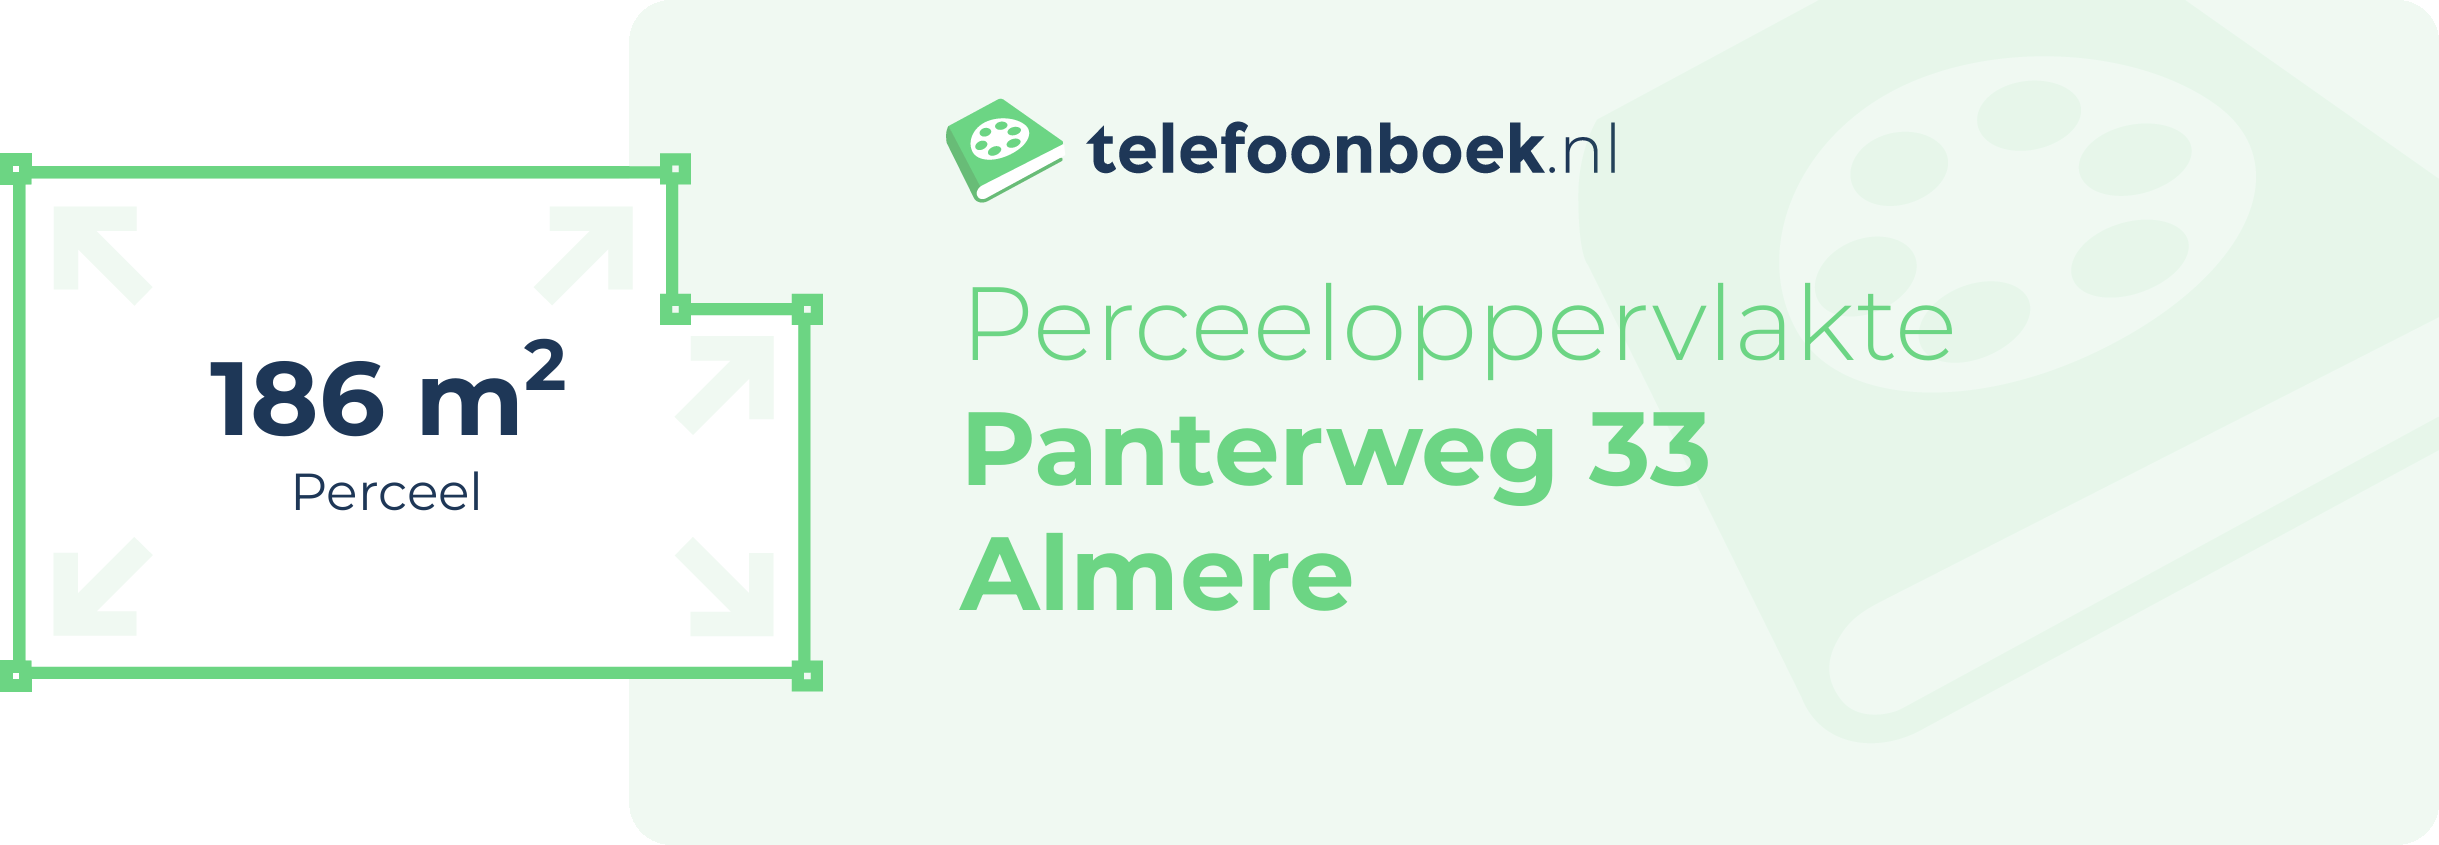 Perceeloppervlakte Panterweg 33 Almere